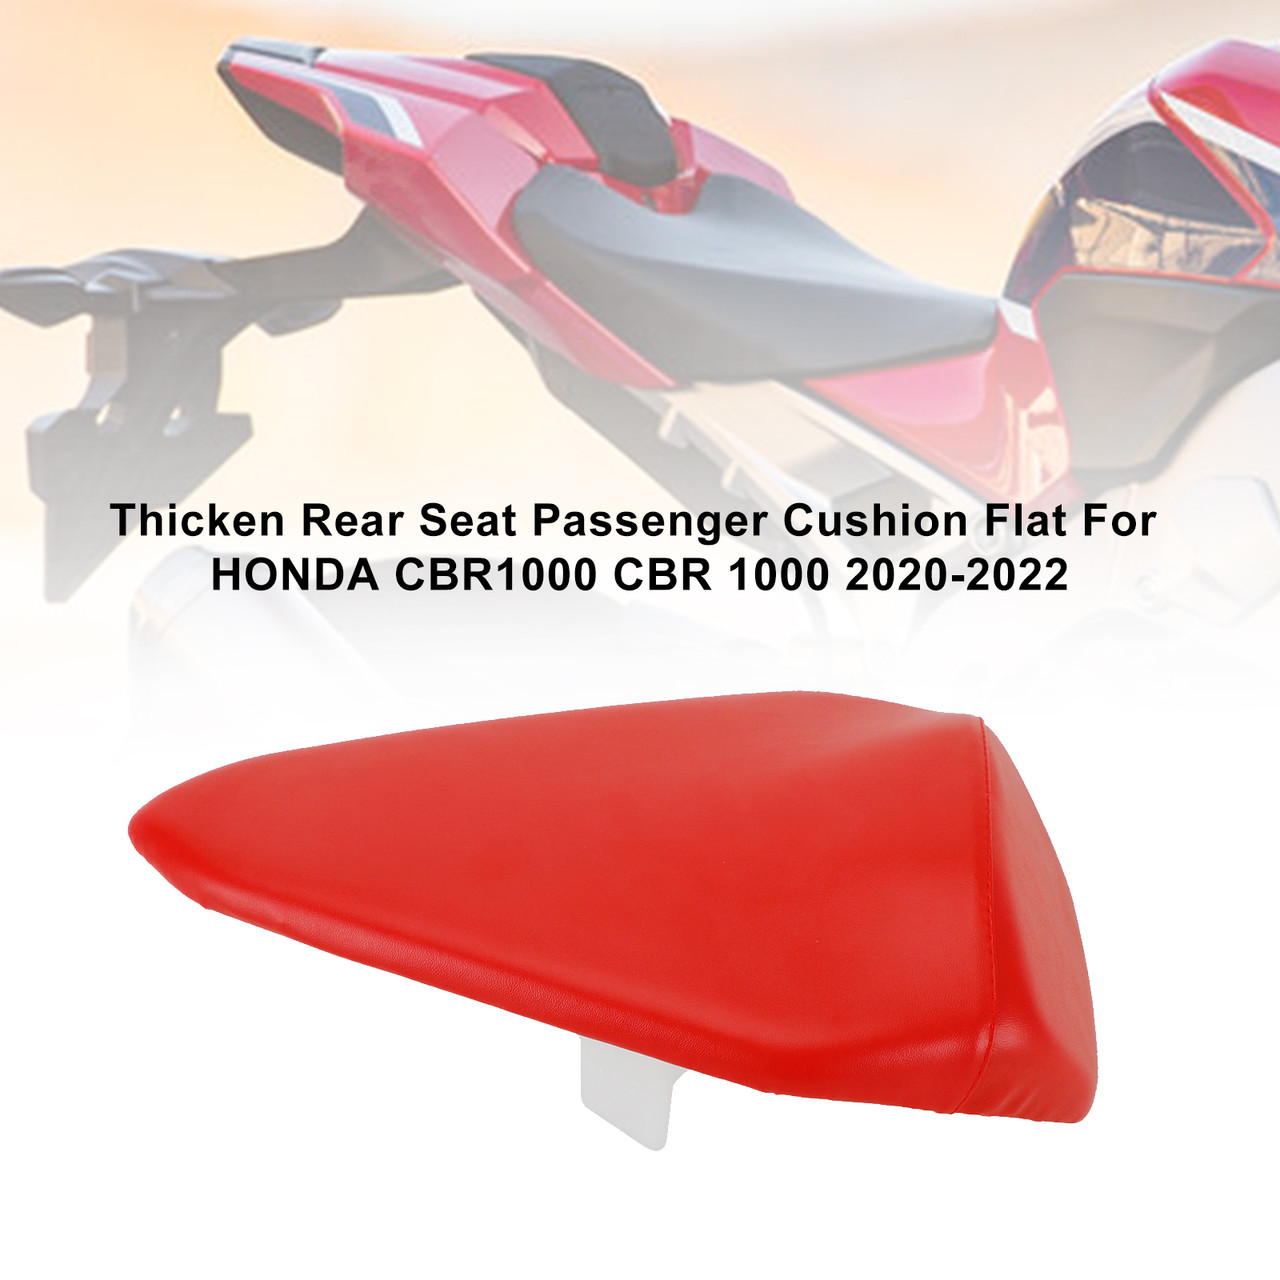 Tail Rear Seat Passenger Cushion Flat Silver For Honda Cbr1000 Cbr 1000 20-22